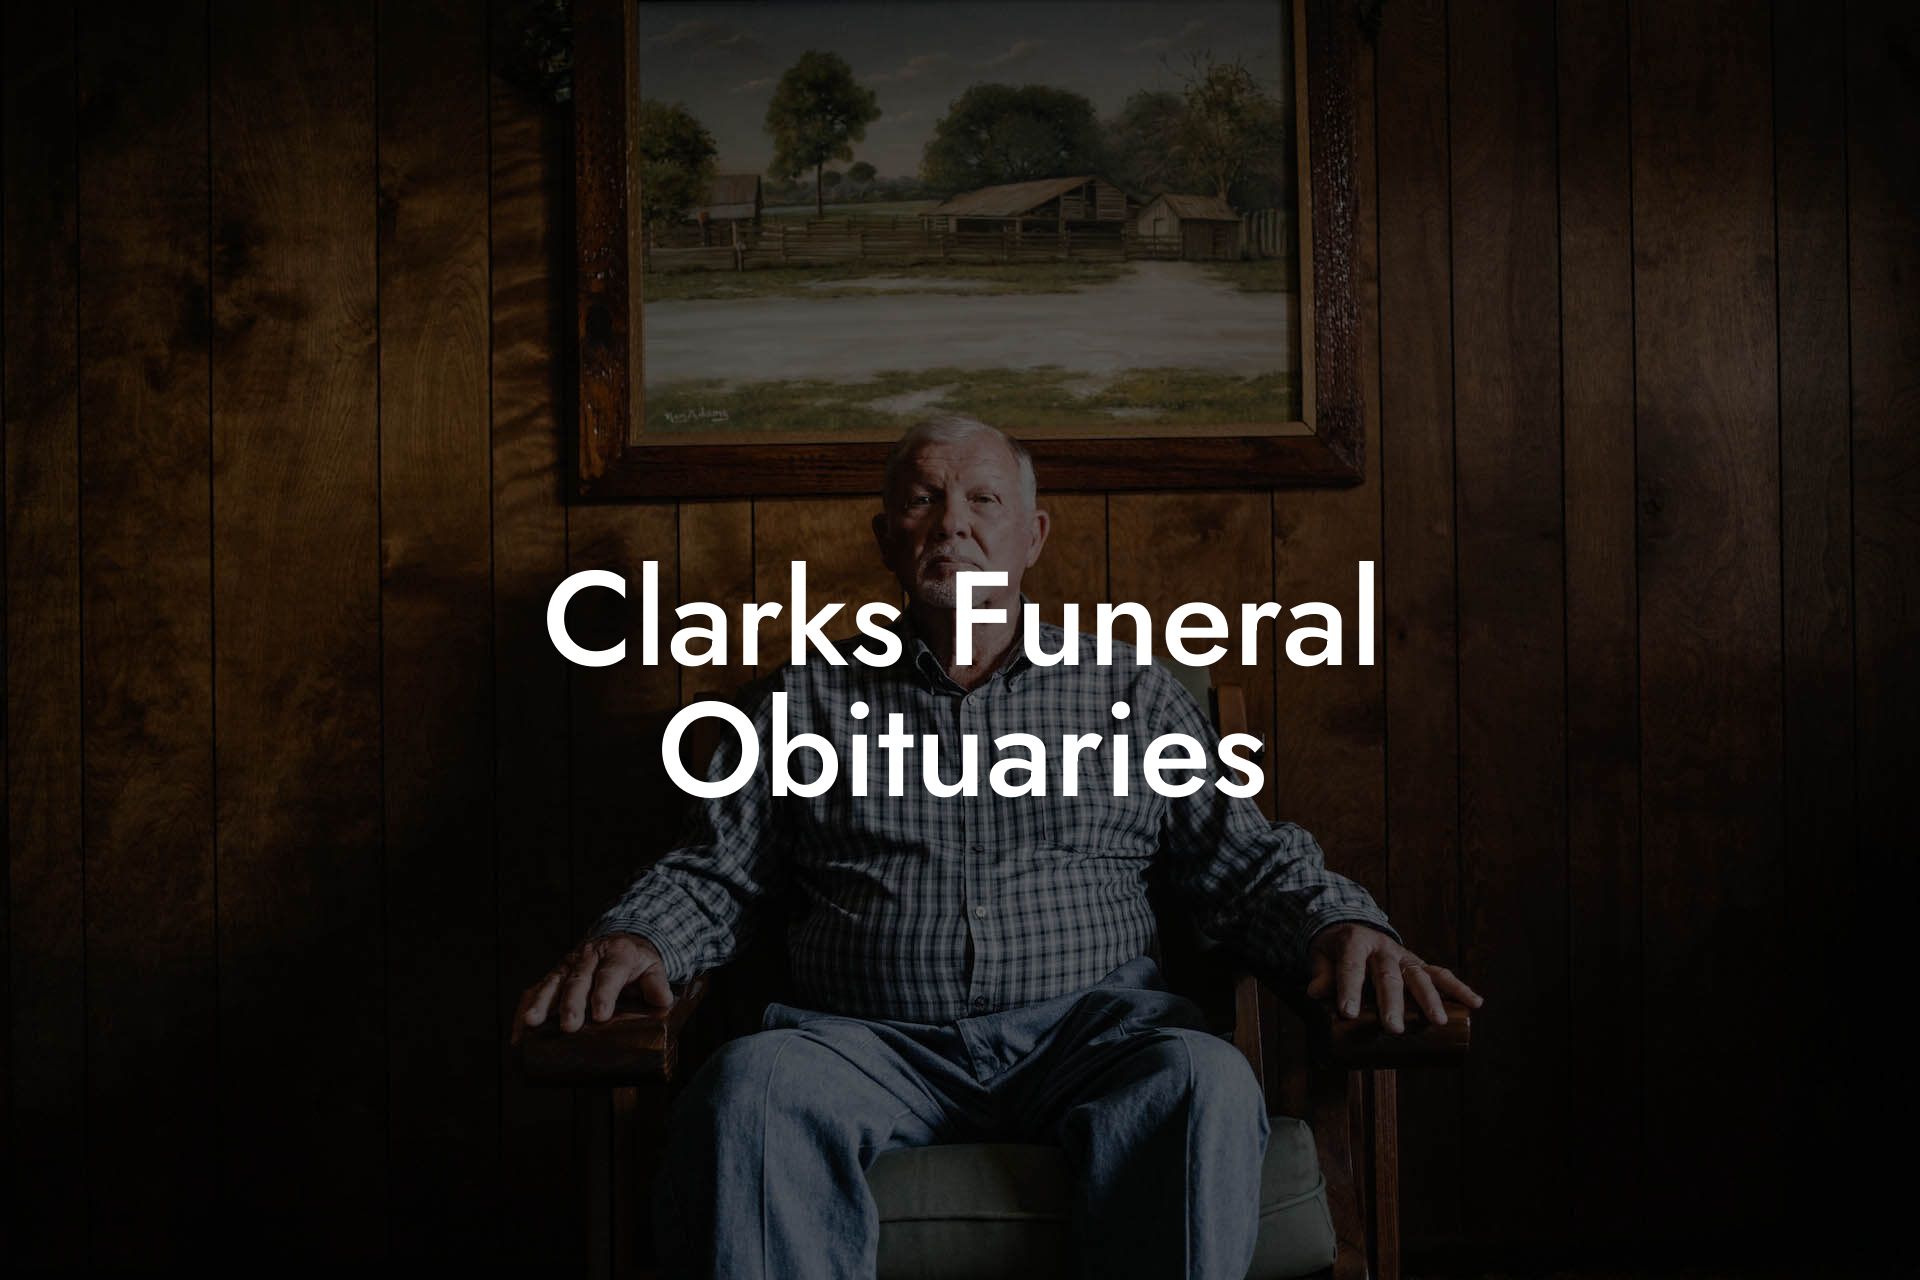 Clarks Funeral Obituaries